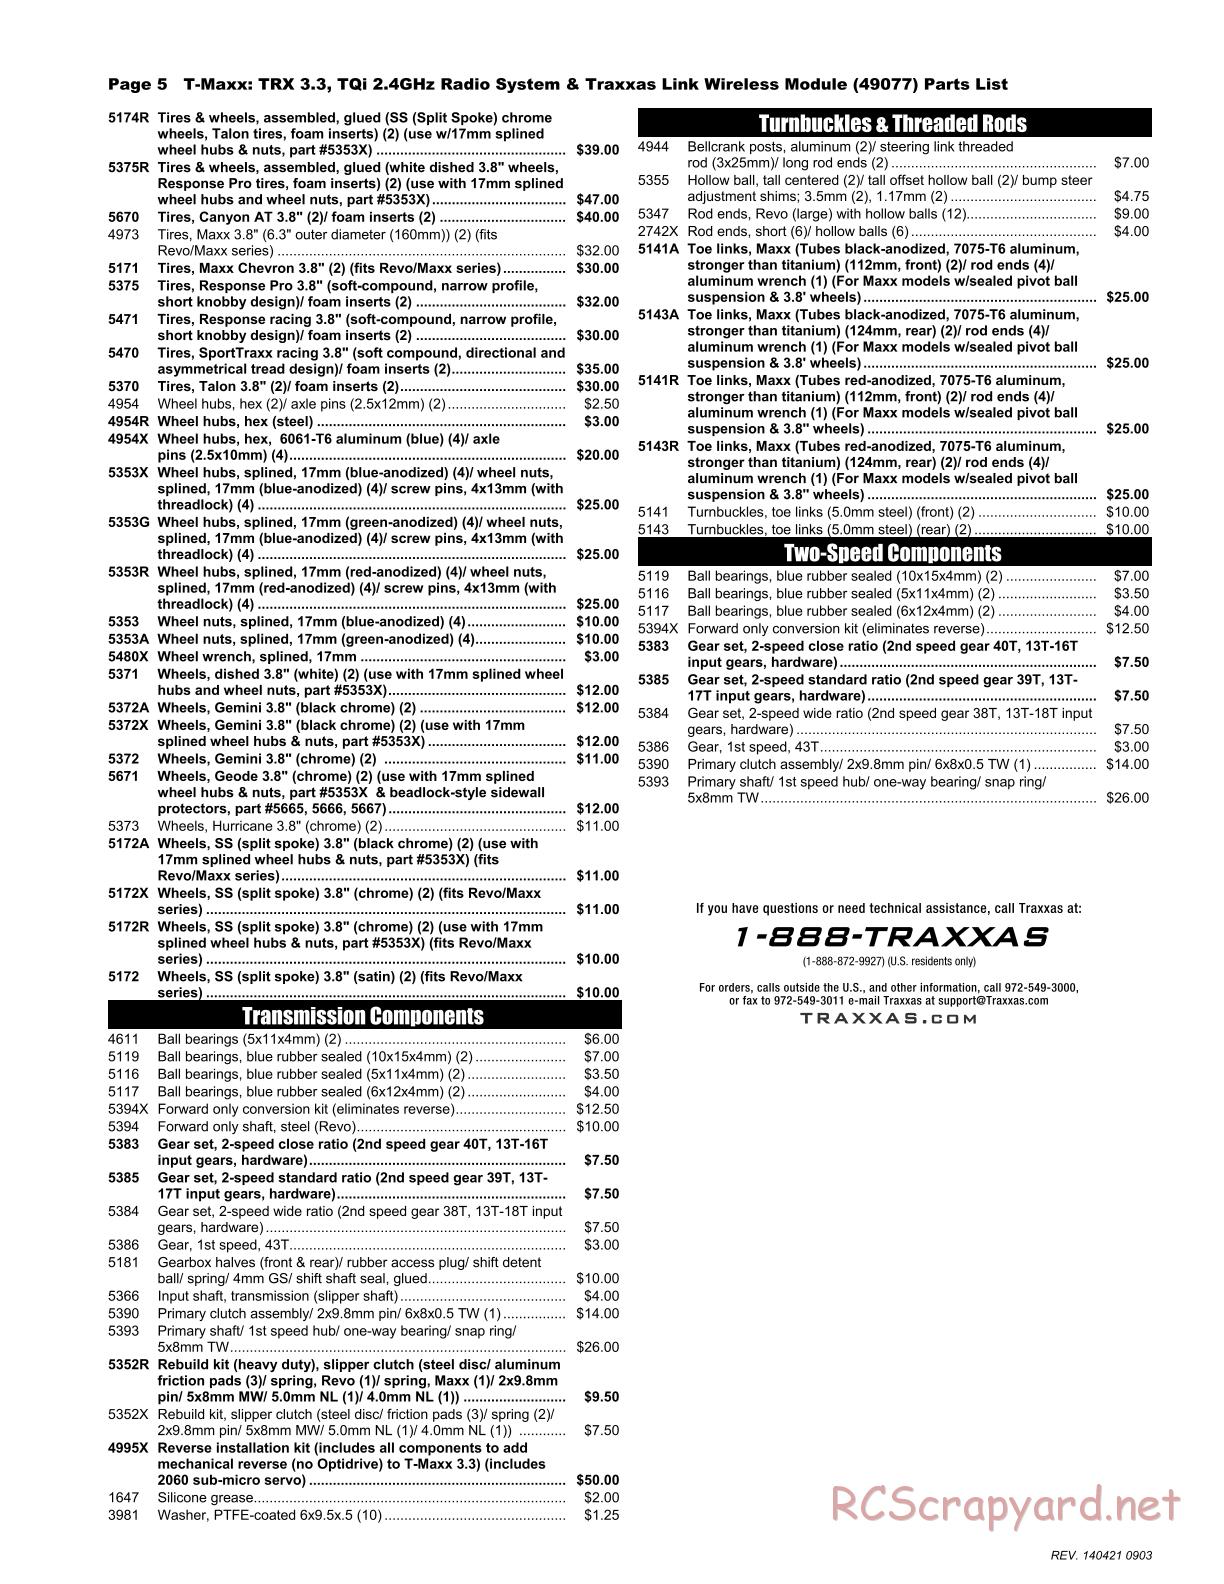 Traxxas - T-Maxx 3.3 (2014) - Parts List - Page 5